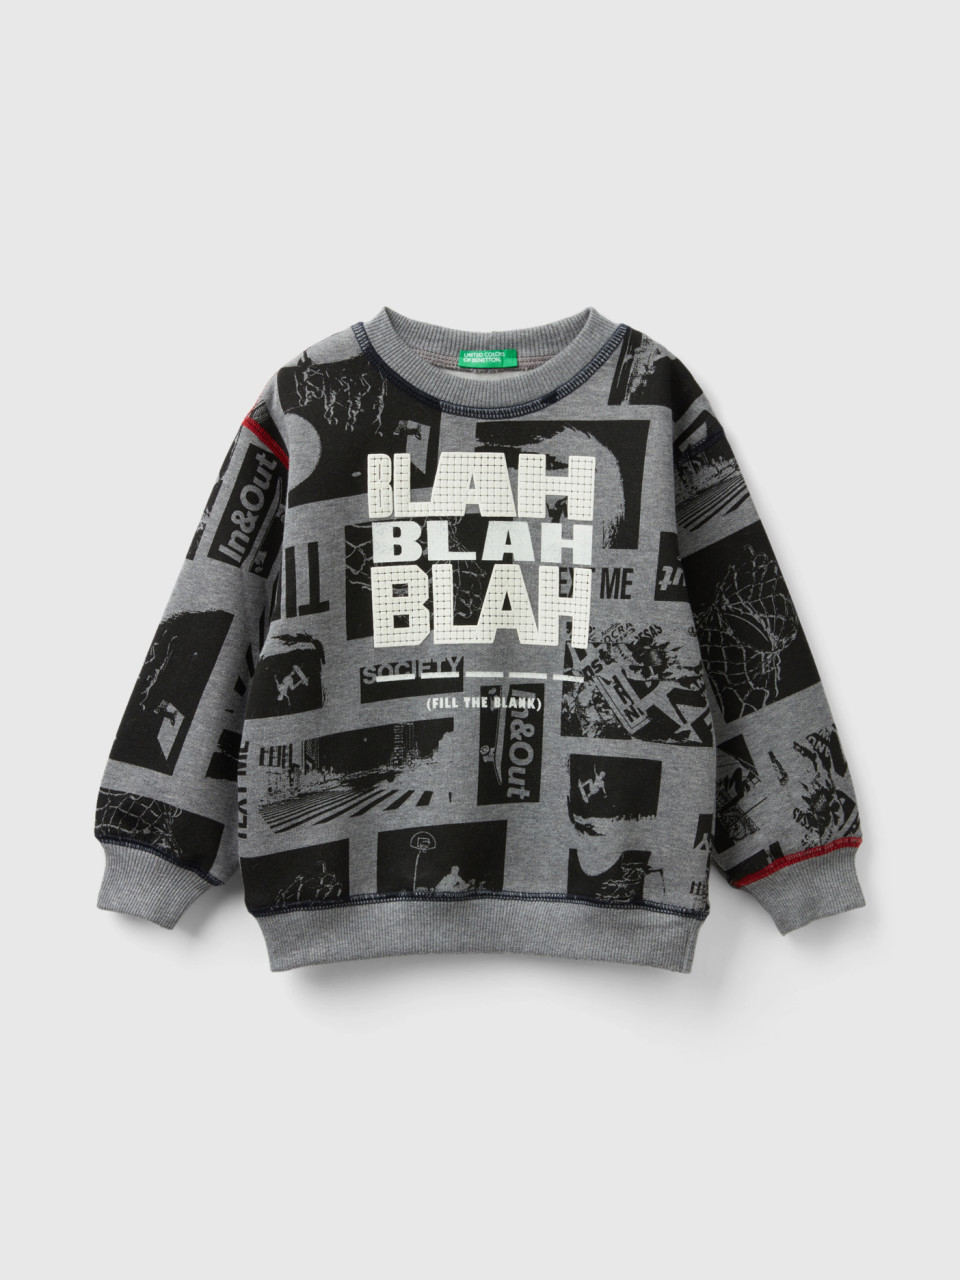 Benetton, Pullover Sweatshirt With City Print, Gray, Kids